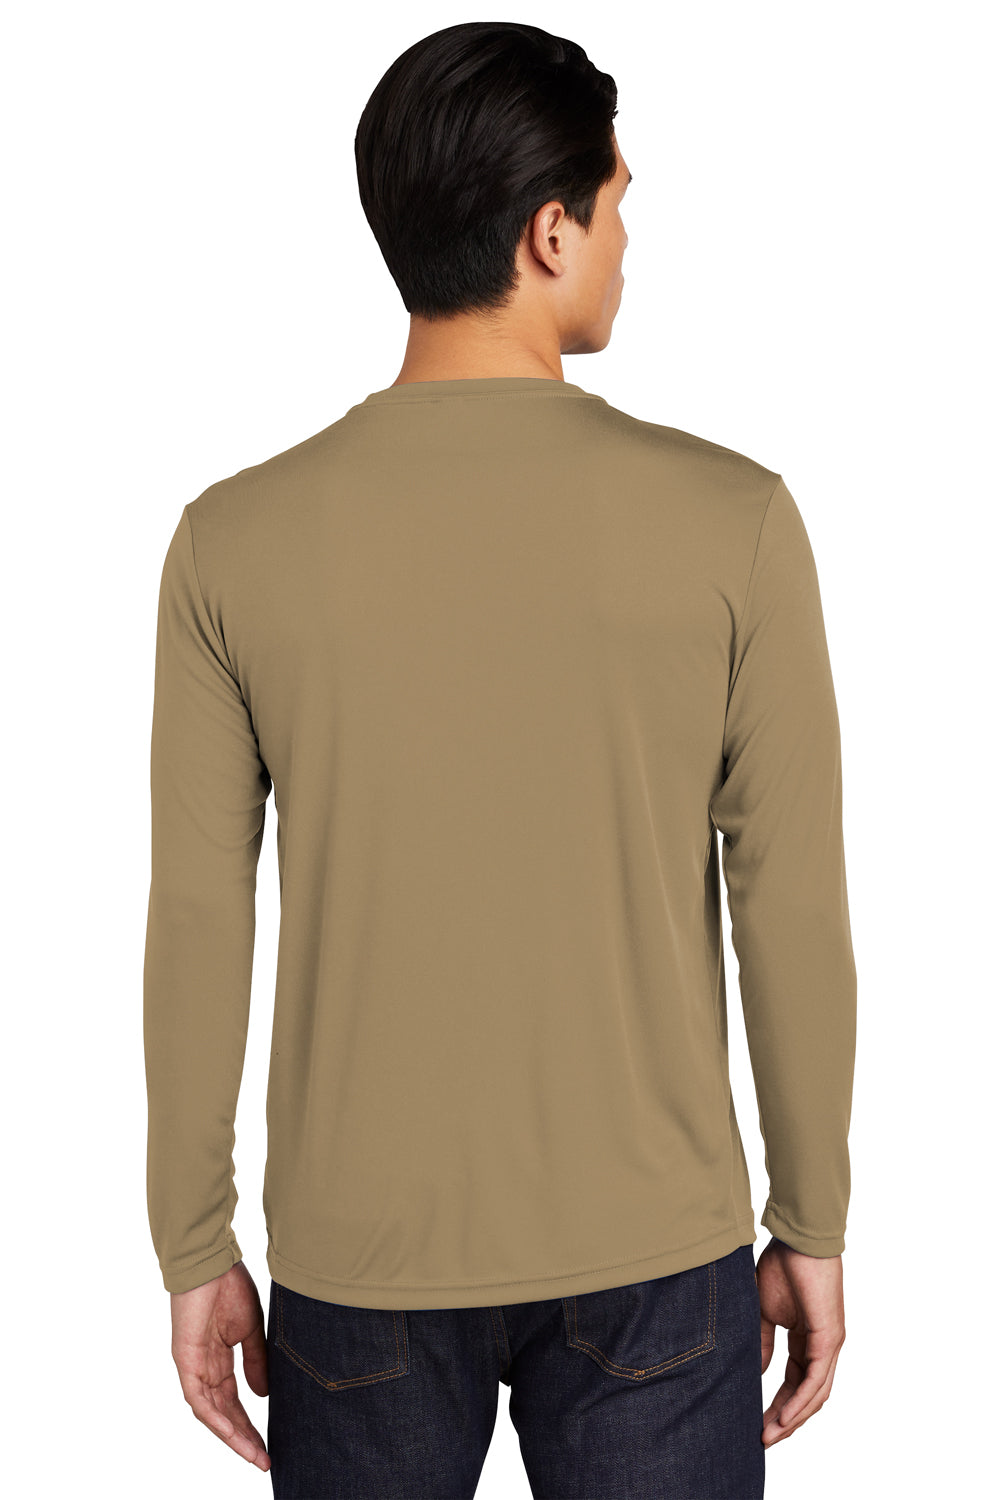 MEN'S MOISTURE WICKING Dri fit Long Sleeve SPORT-TEK T-shirt NEW XS-4XL  ST350LS